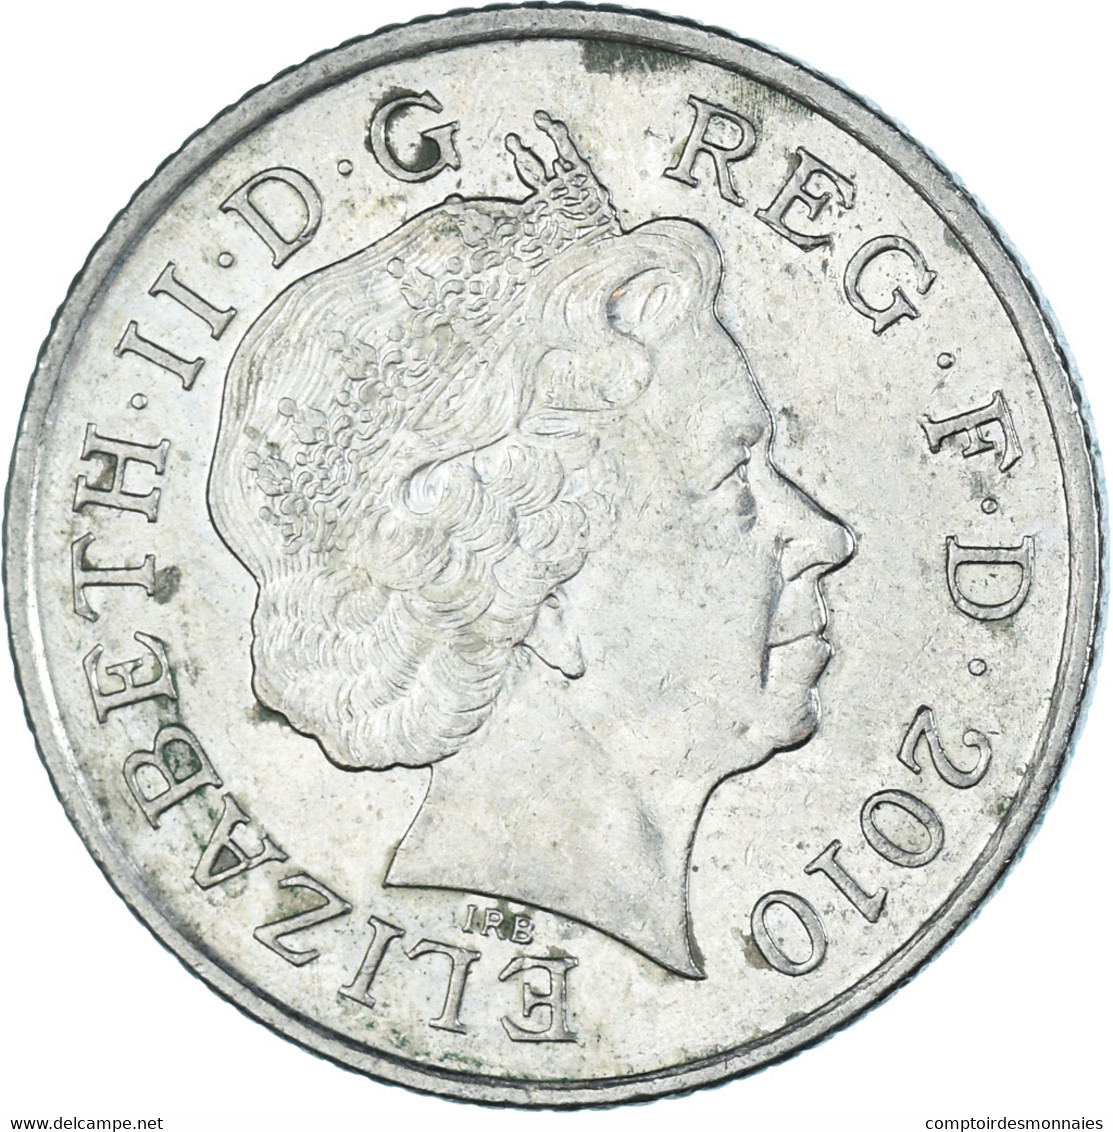 Monnaie, Grande-Bretagne, 10 Pence, 2010 - 10 Pence & 10 New Pence